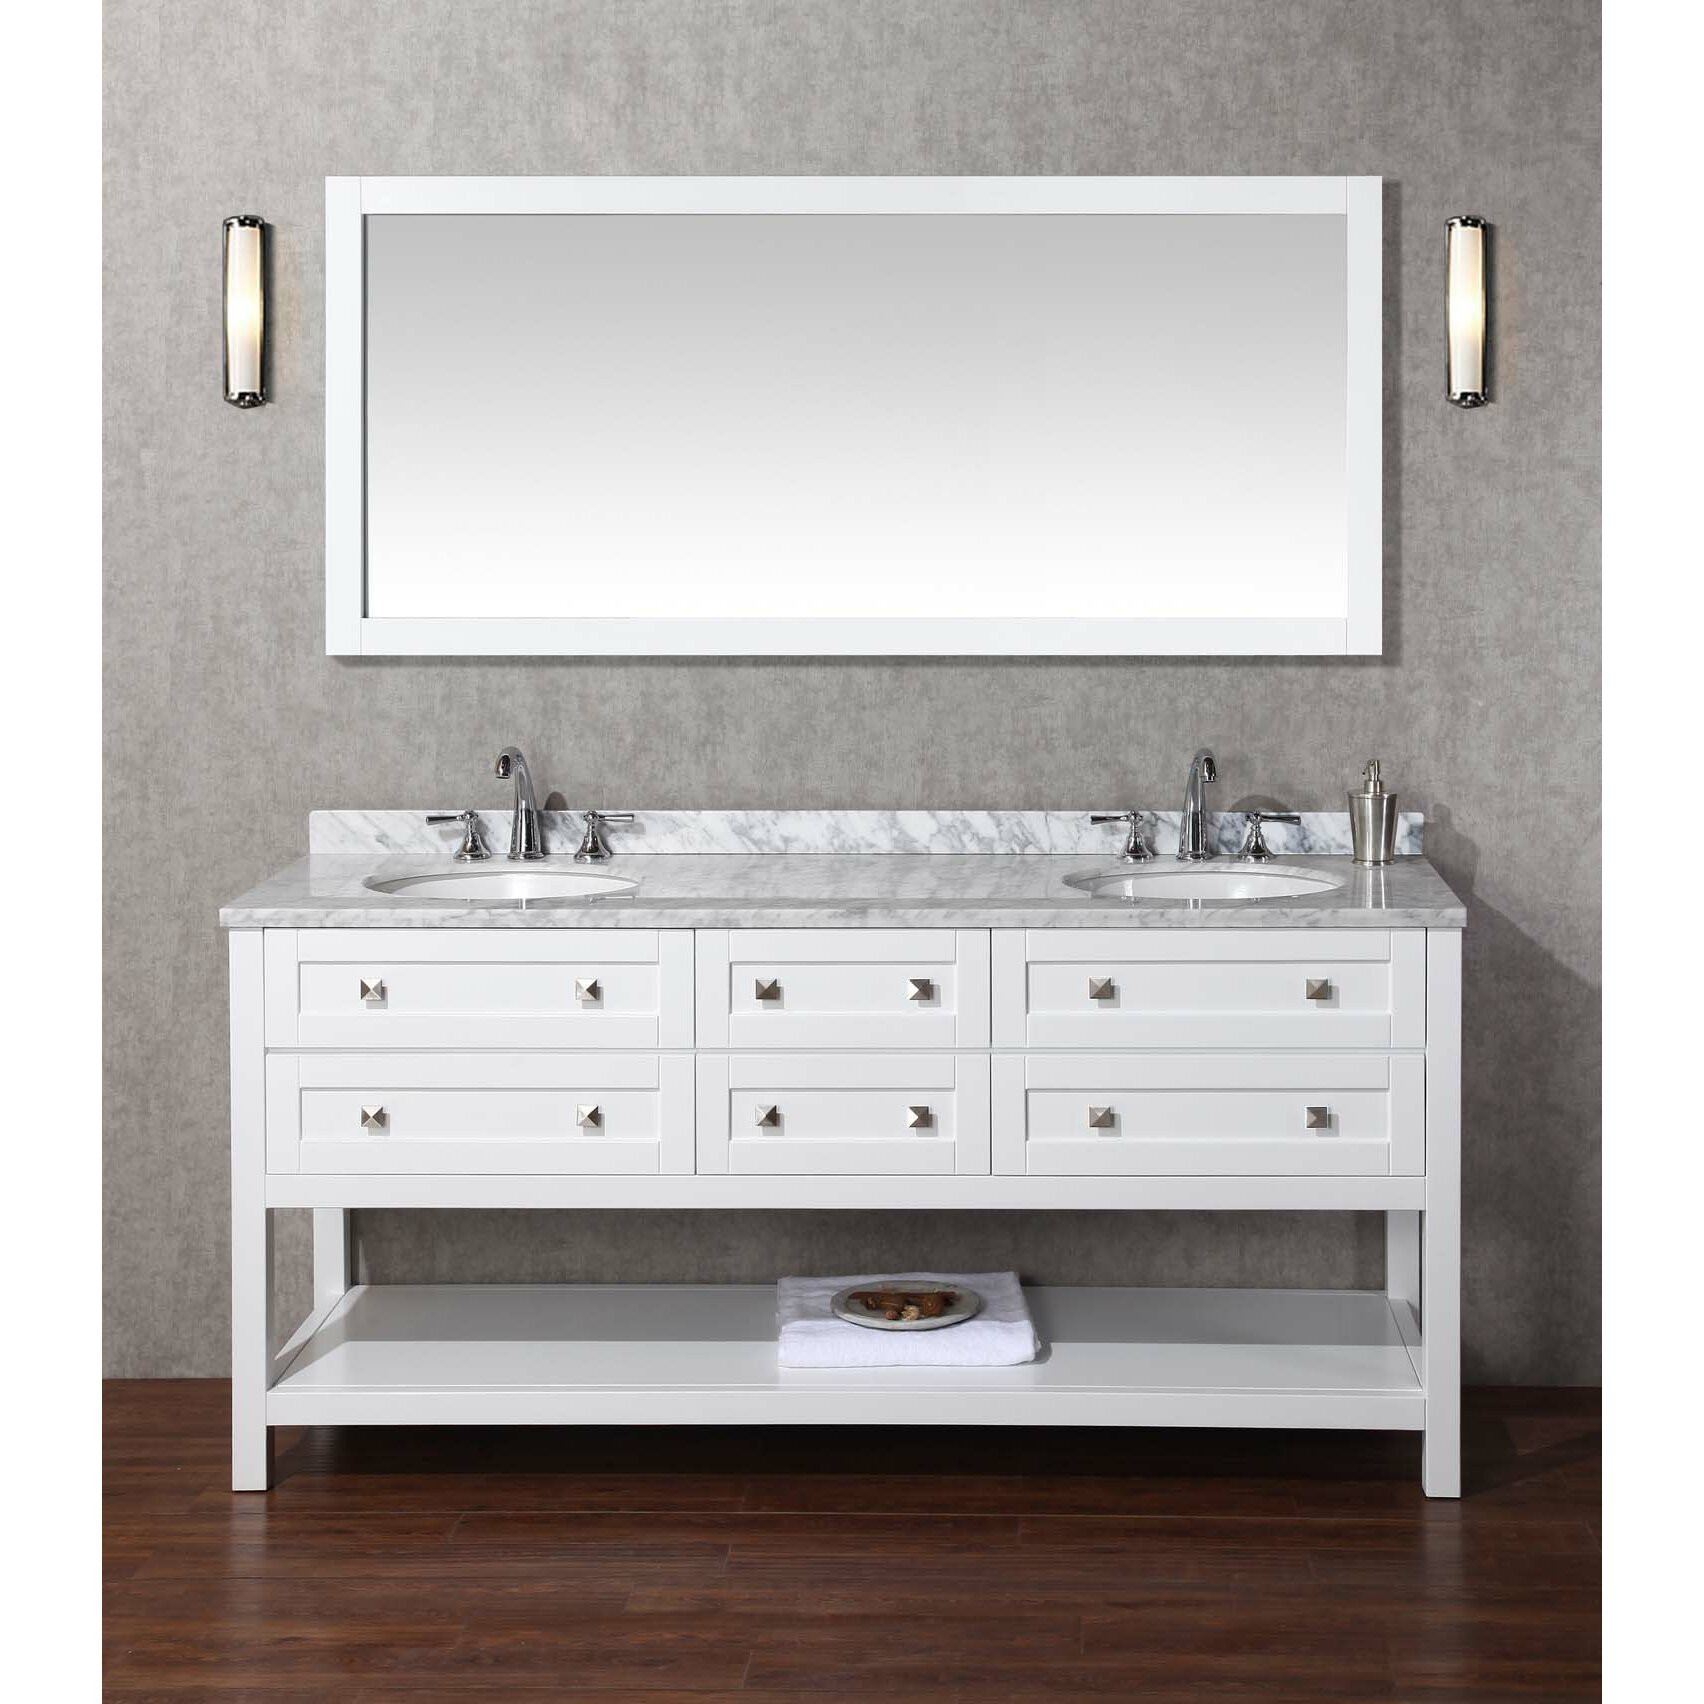 72 Inch Bathroom Mirror
 dCOR design Albia 72" Double Bathroom Vanity Set with